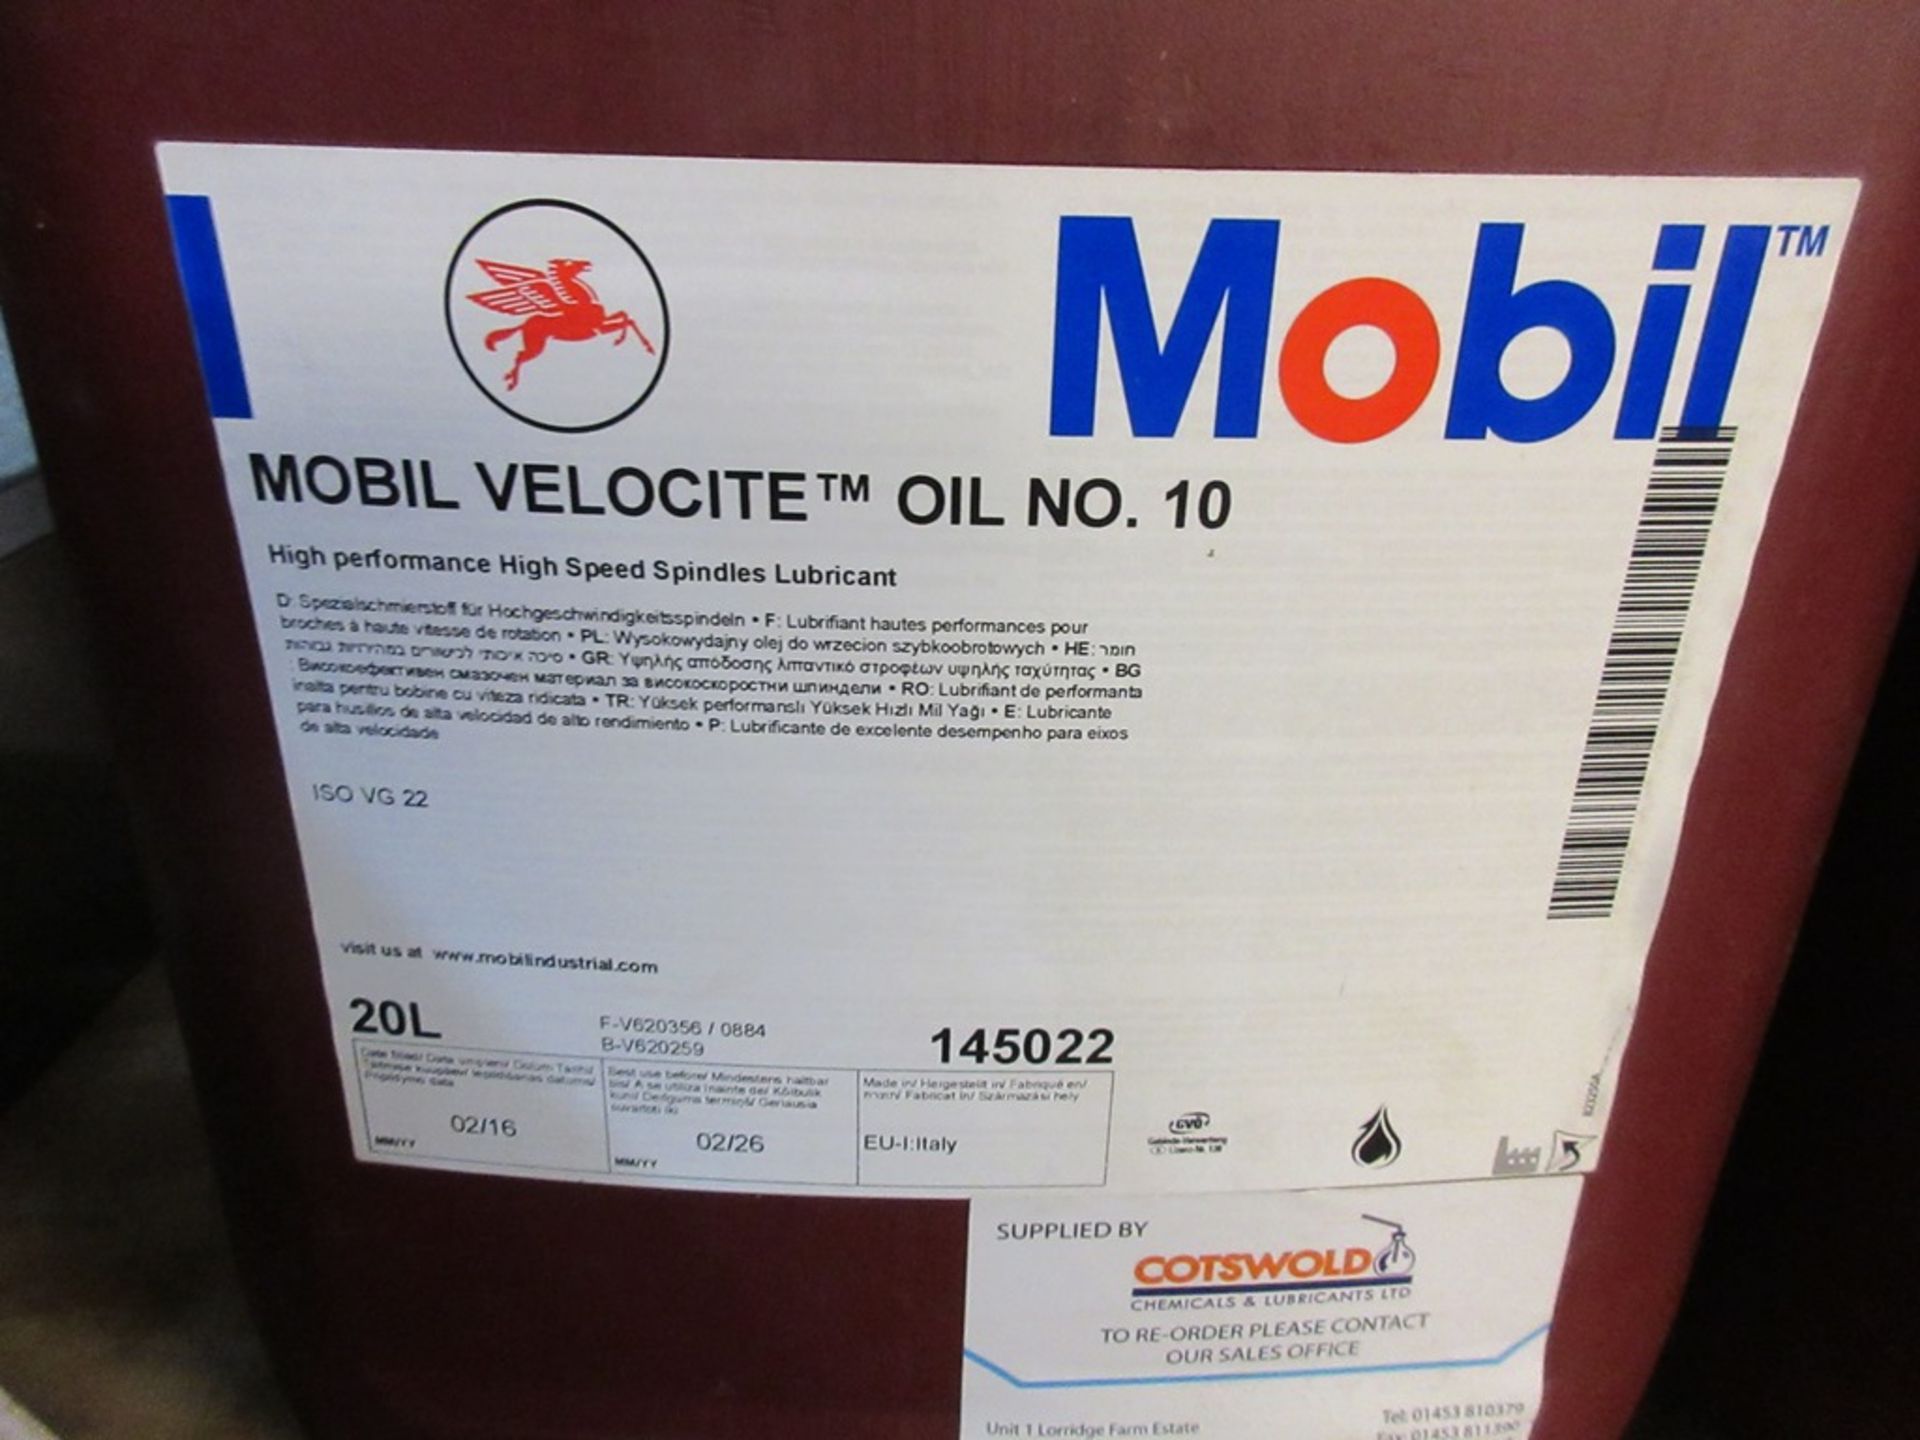 Two mobile velocite oil No. 10 - Image 2 of 3